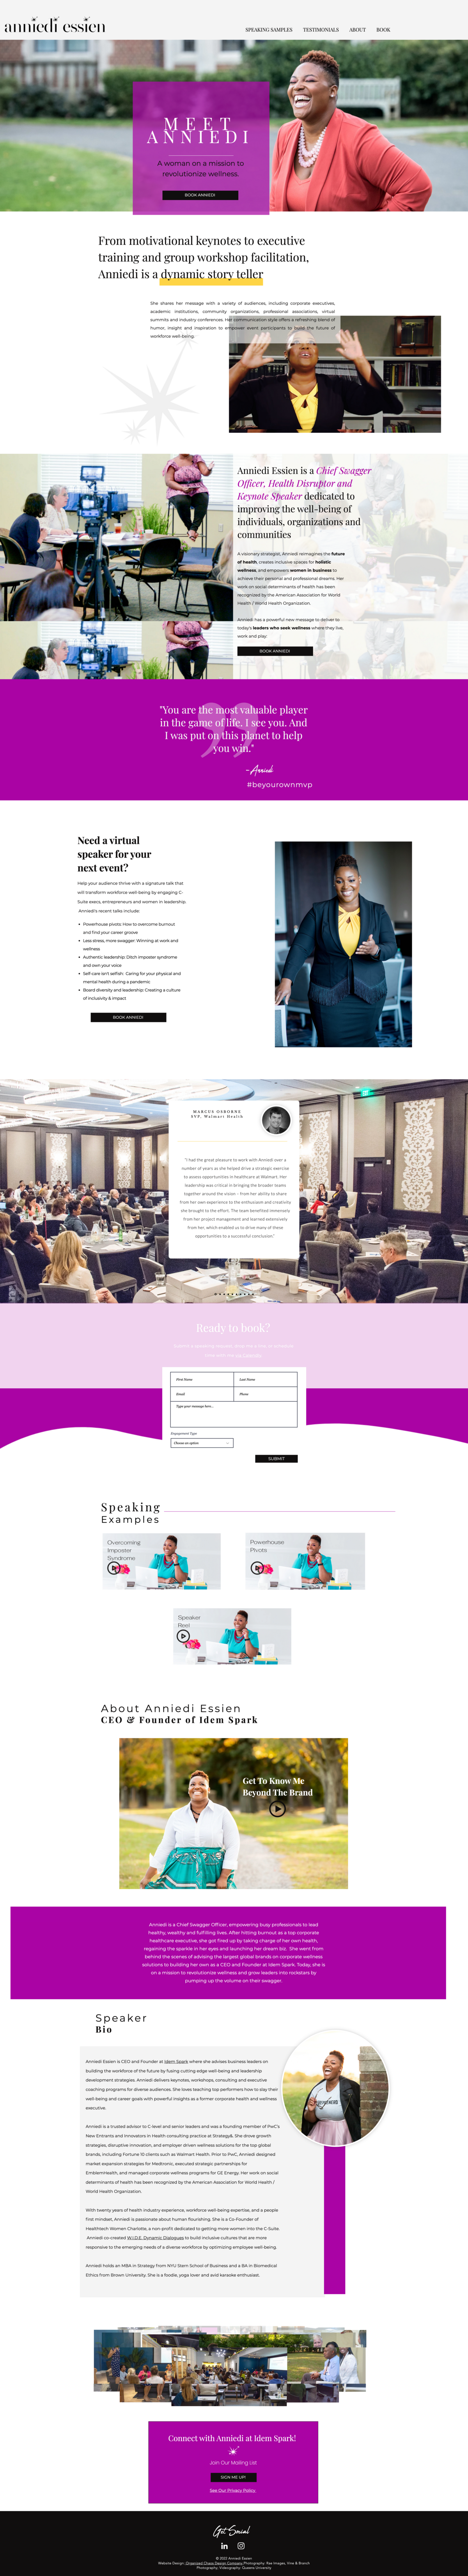 Speaker Website Design